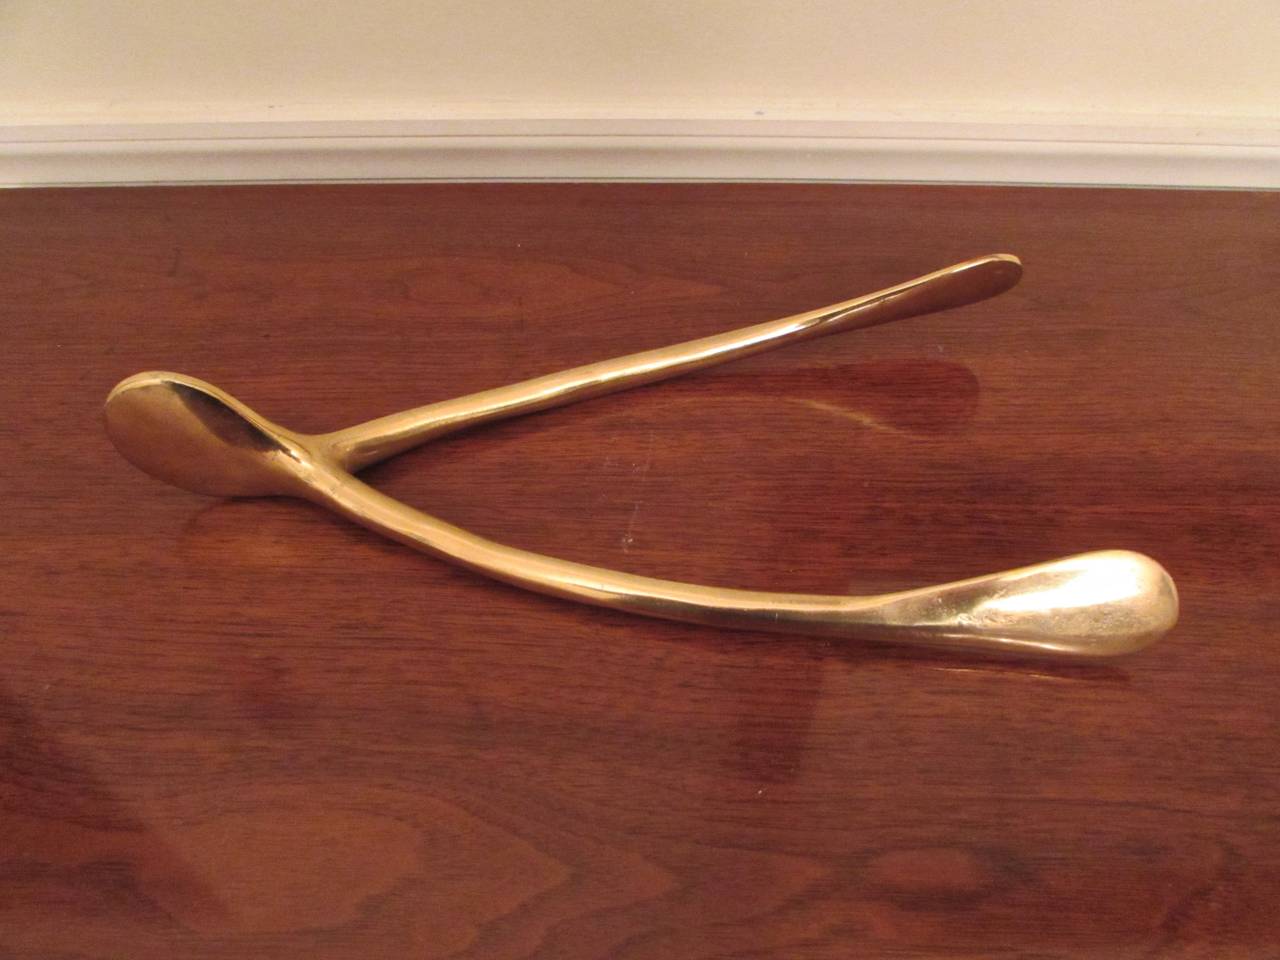 Cast Massive Anatomical Brass Wishbone Objet or Paperweight, Carl Auböck Style